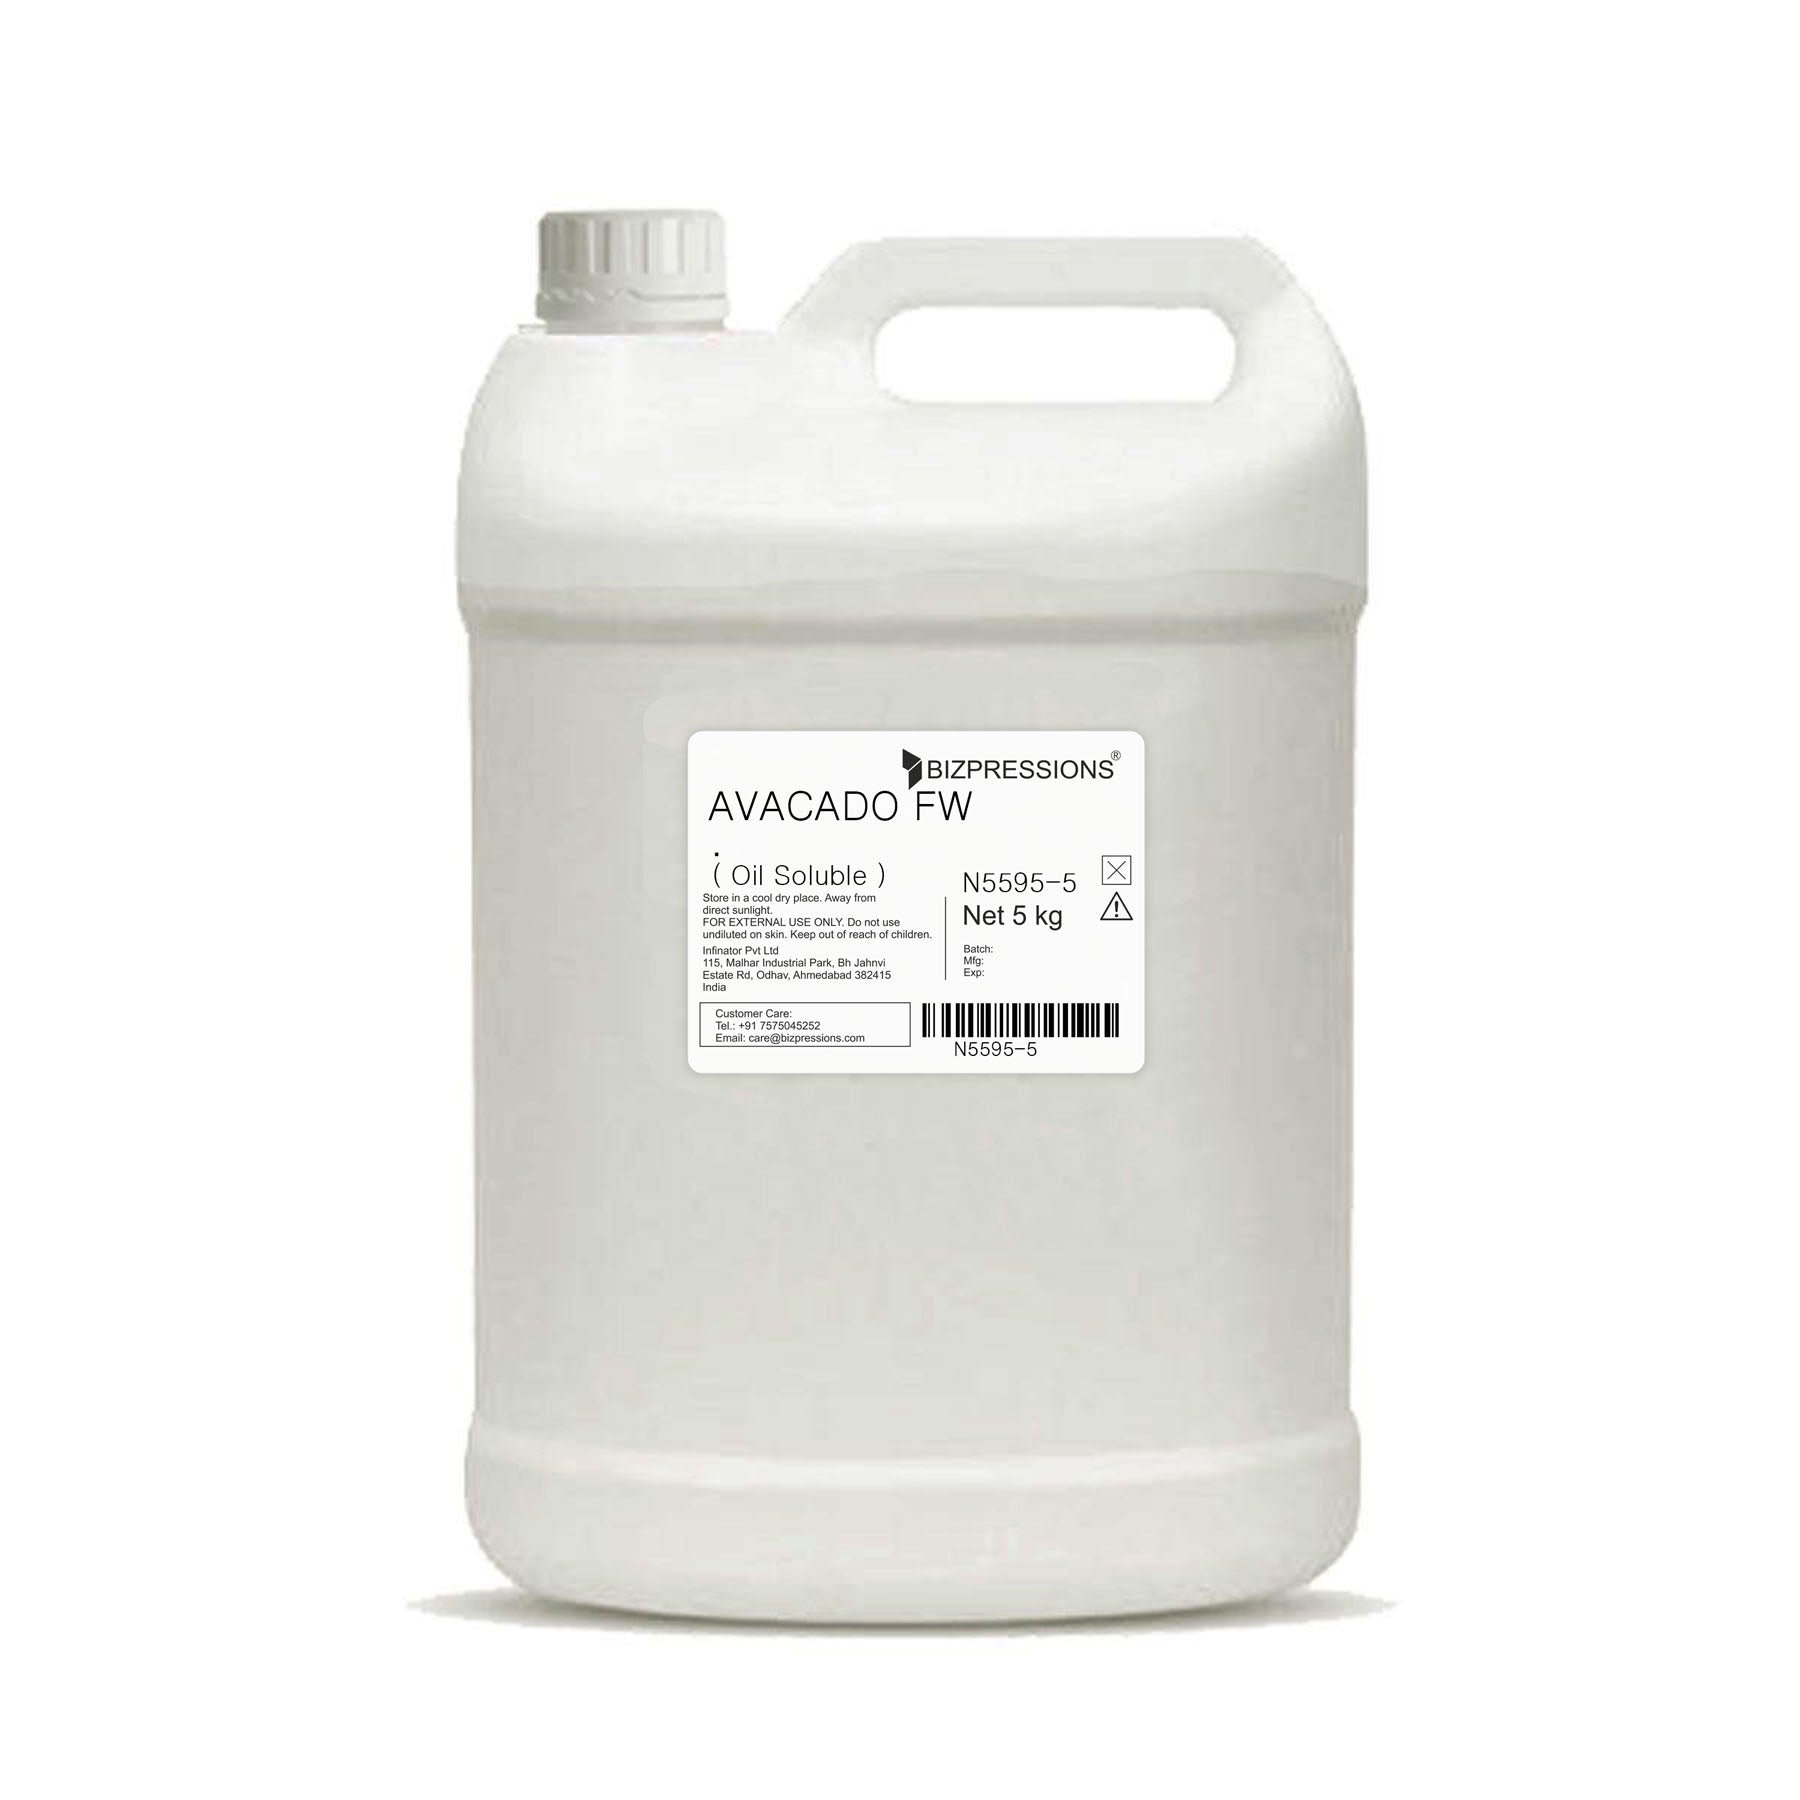 AVACADO FW - Fragrance ( Oil Soluble ) - 5 kg